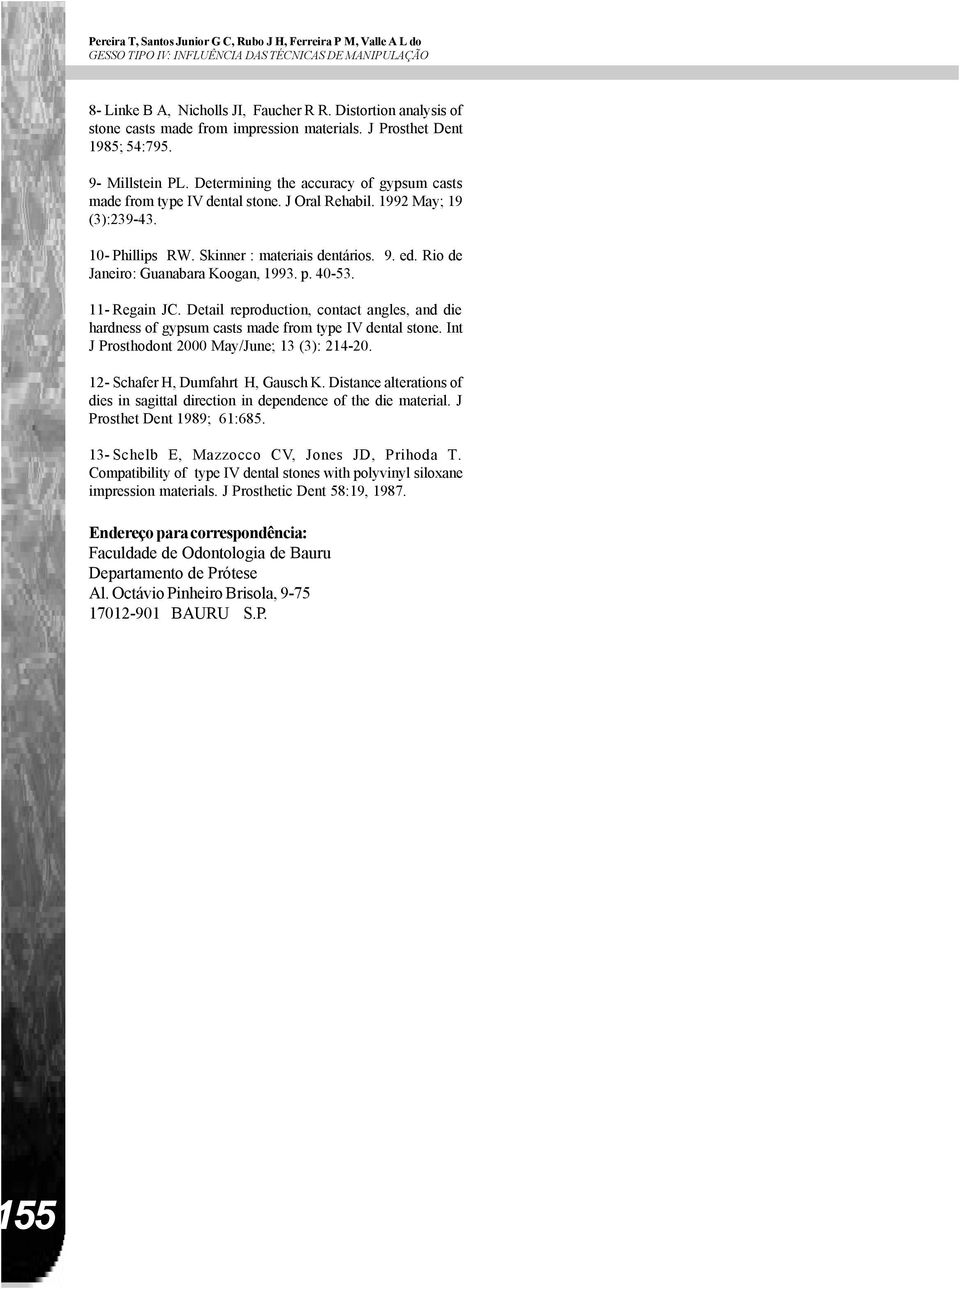 J Oral Rehabil. 1992 May; 19 (3):239-43. 10- Phillips RW. Skinner : materiais dentários. 9. ed. Rio de Janeiro: Guanabara Koogan, 1993. p. 40-53. 11- Regain JC.